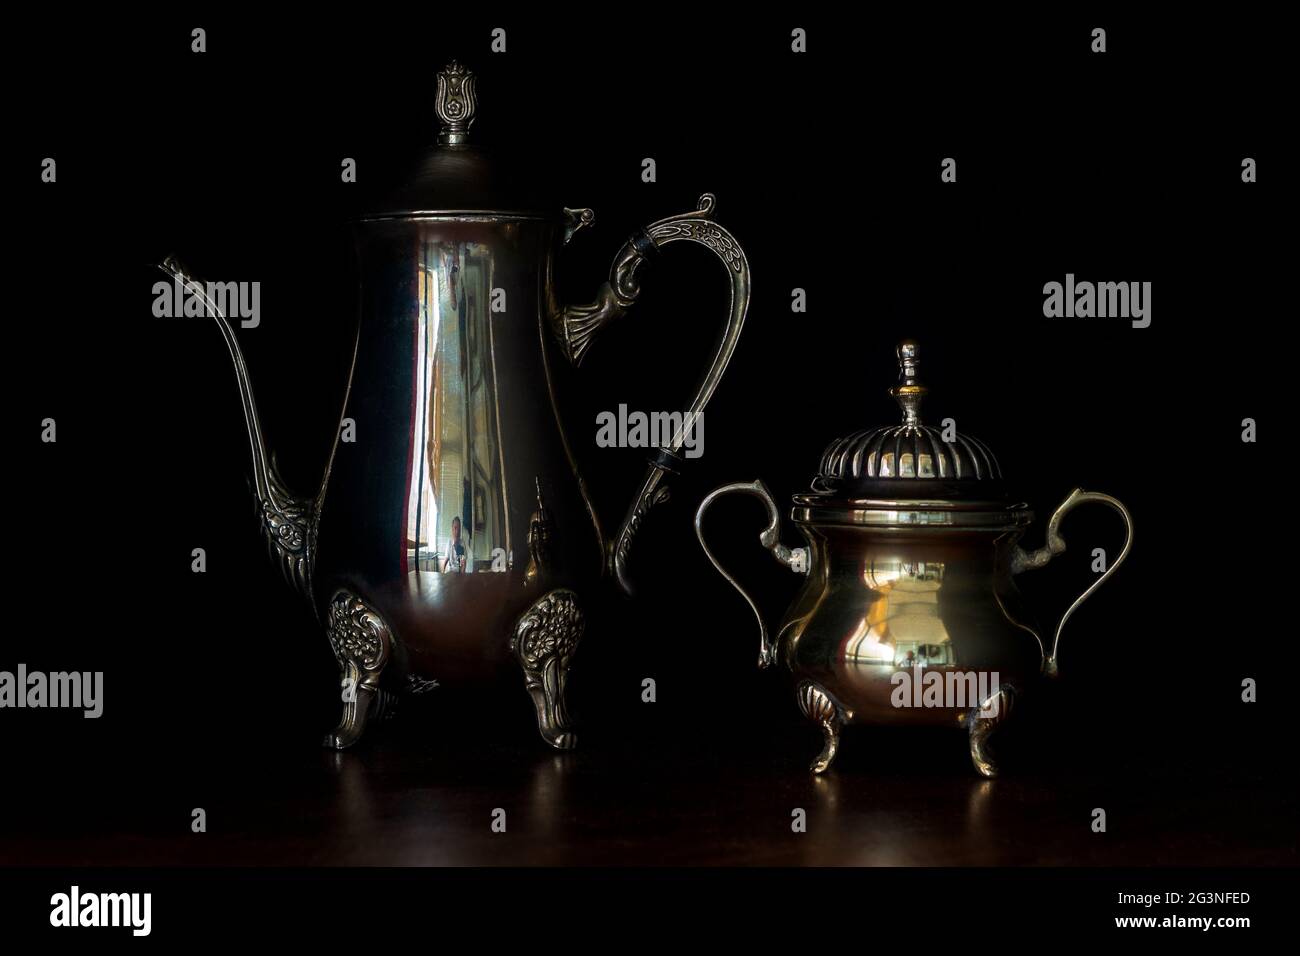 Tin coffee pot hi-res stock photography and images - Alamy